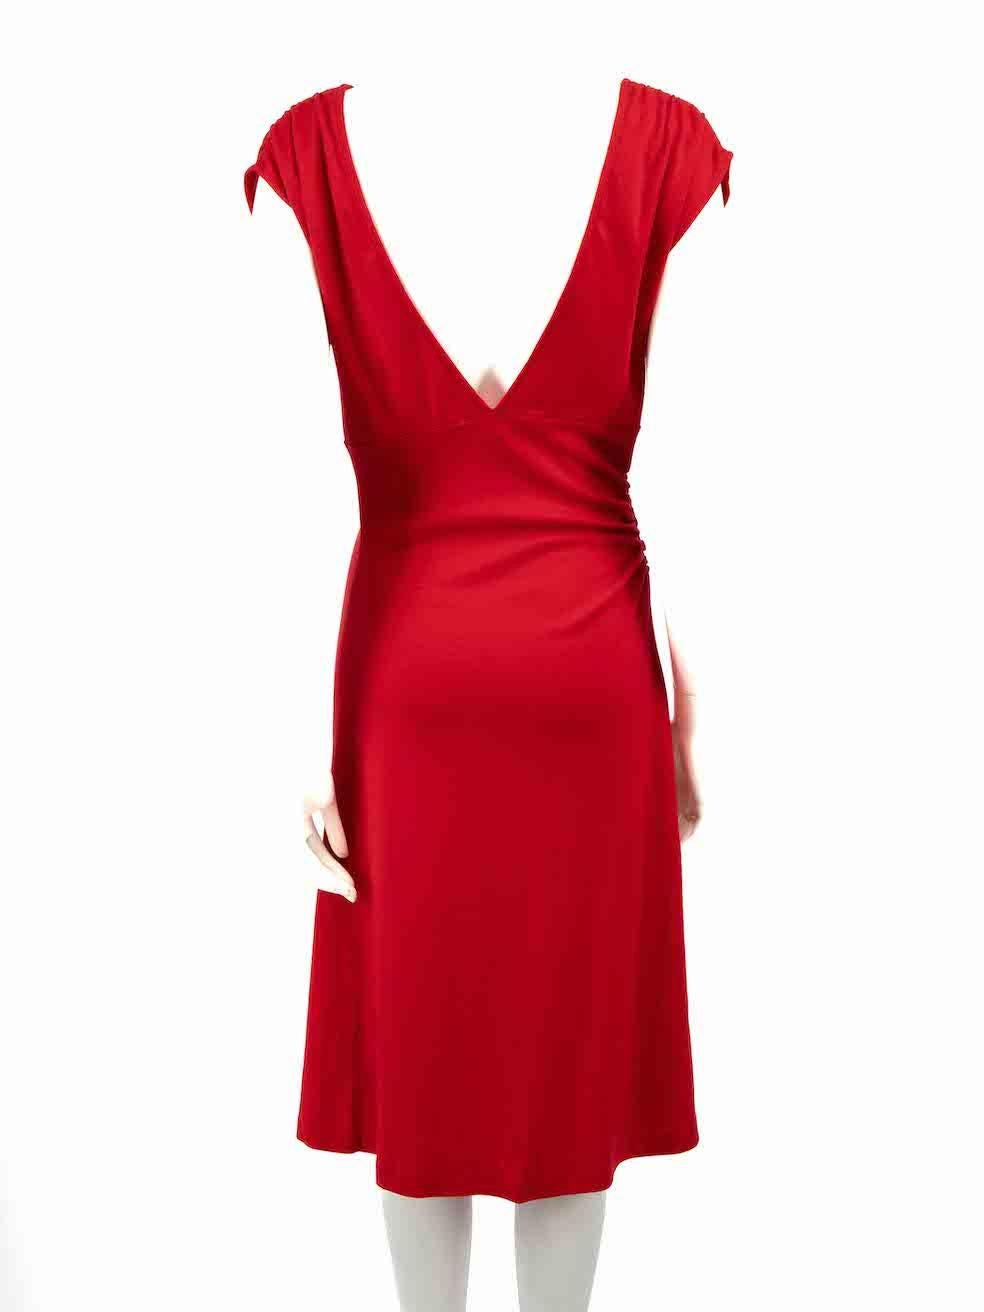 Diane Von Furstenberg Red Wool Knee Length Dress Size XXL In Good Condition For Sale In London, GB